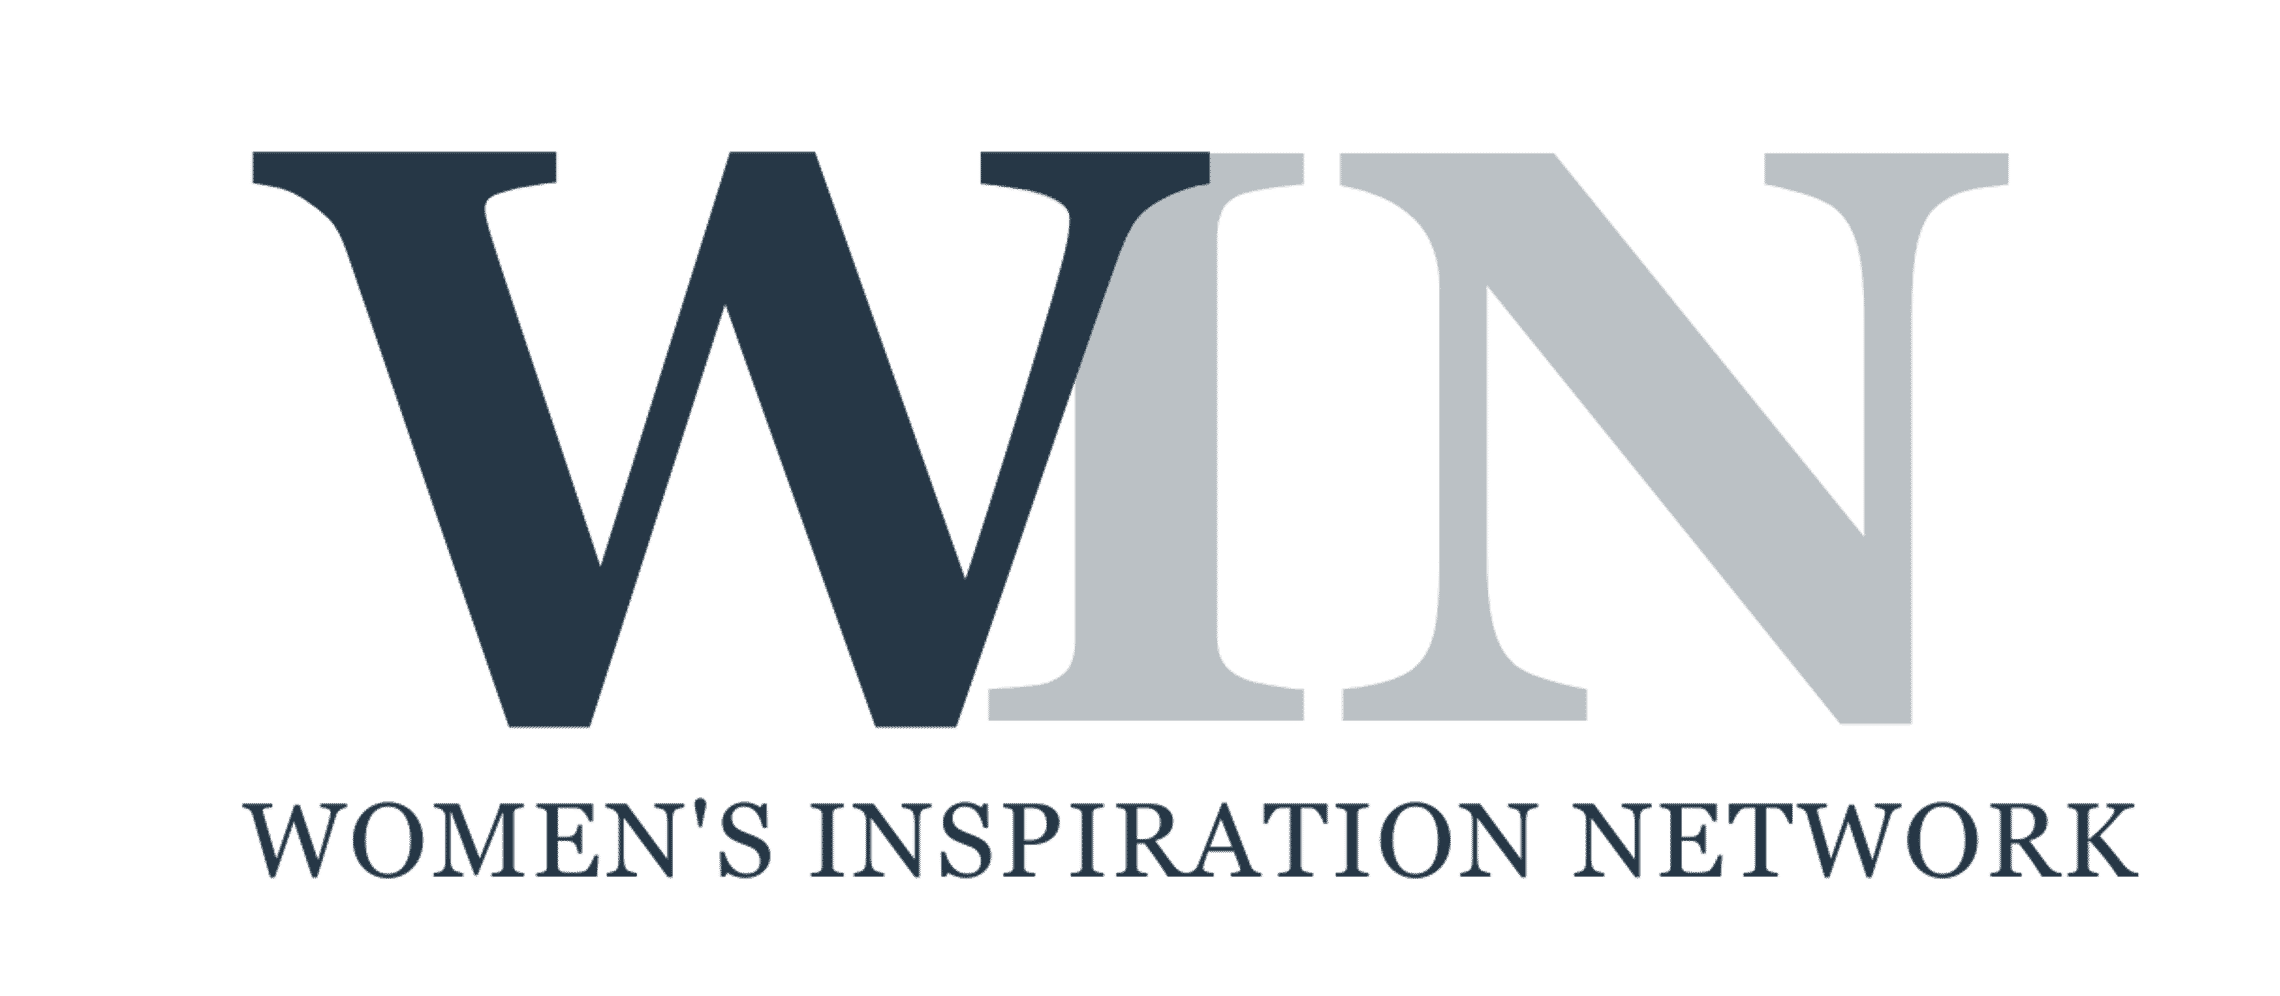 Women's Inspiration Network logo